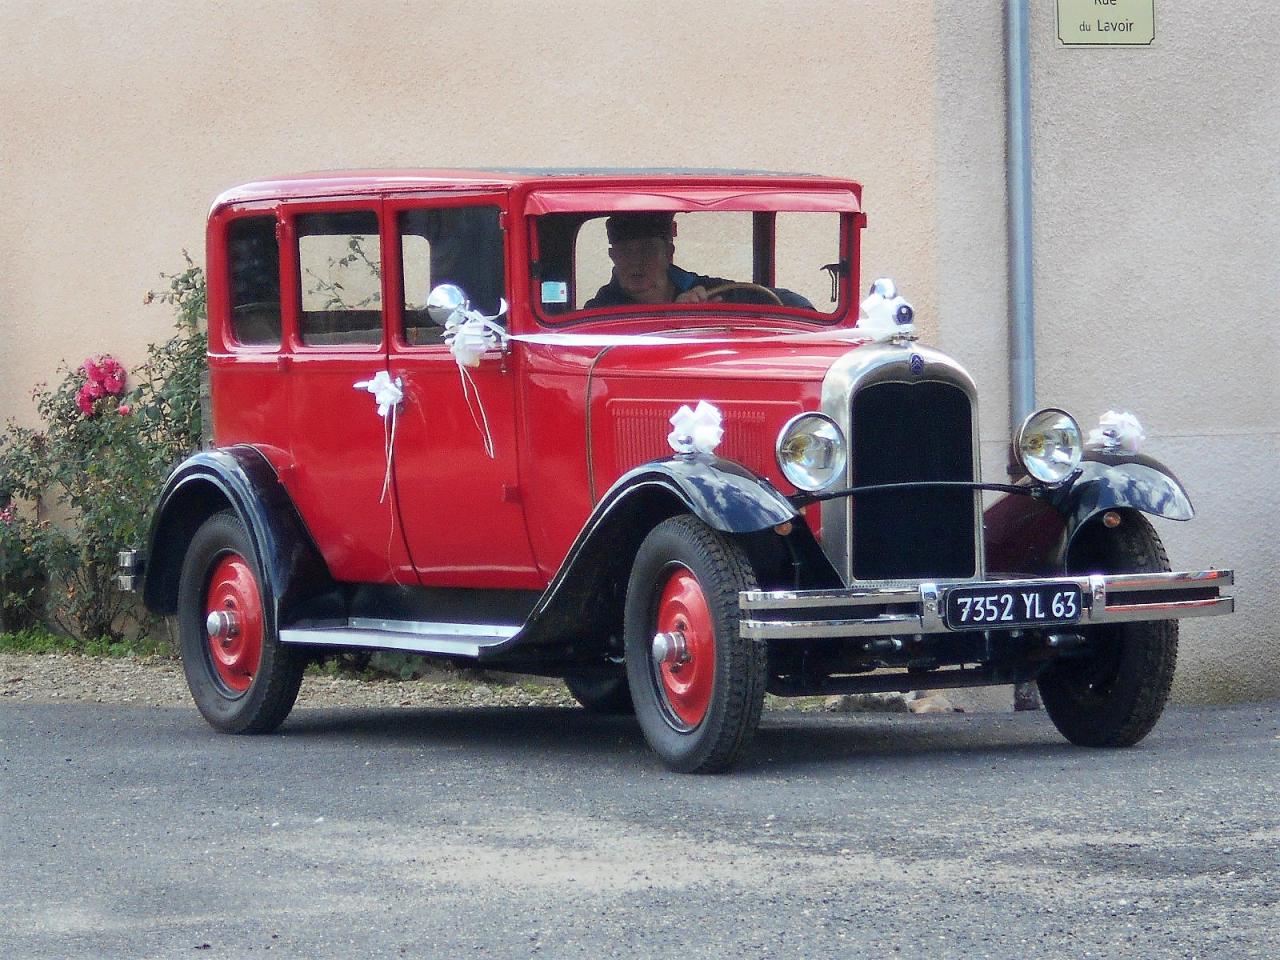 Citroën C4 de Paul